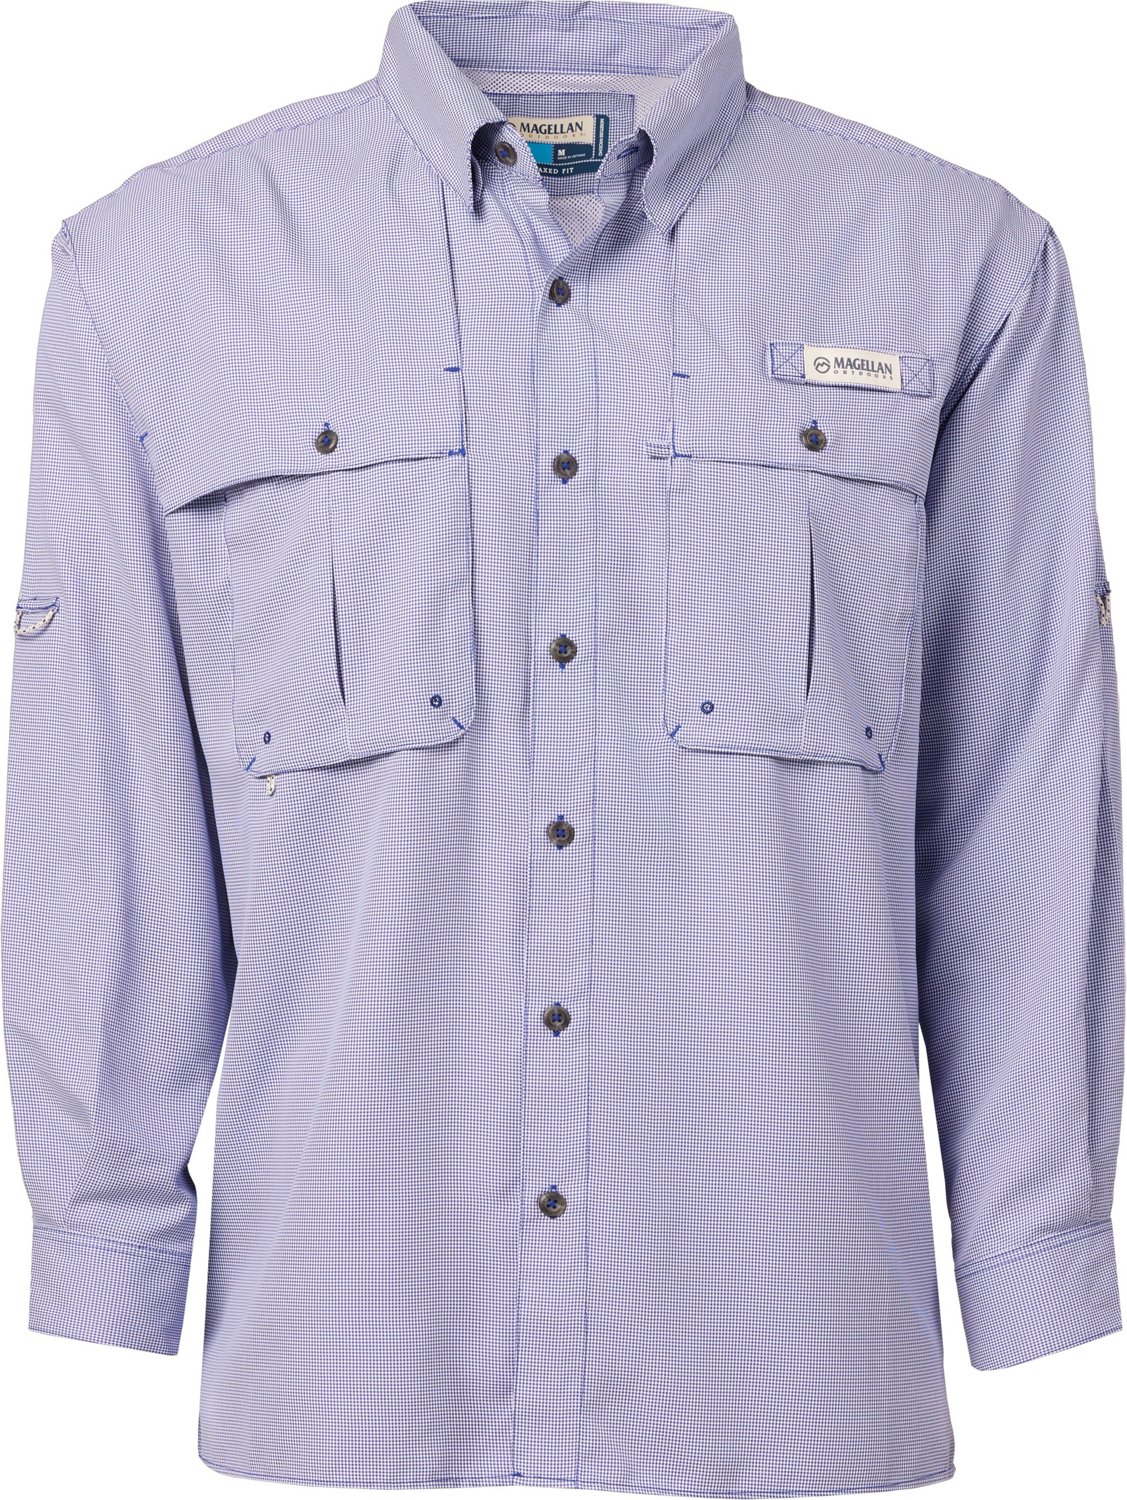 Men's Shirts & T-Shirts | Long Sleeve, Short Sleeve, Mens Polo Shirts